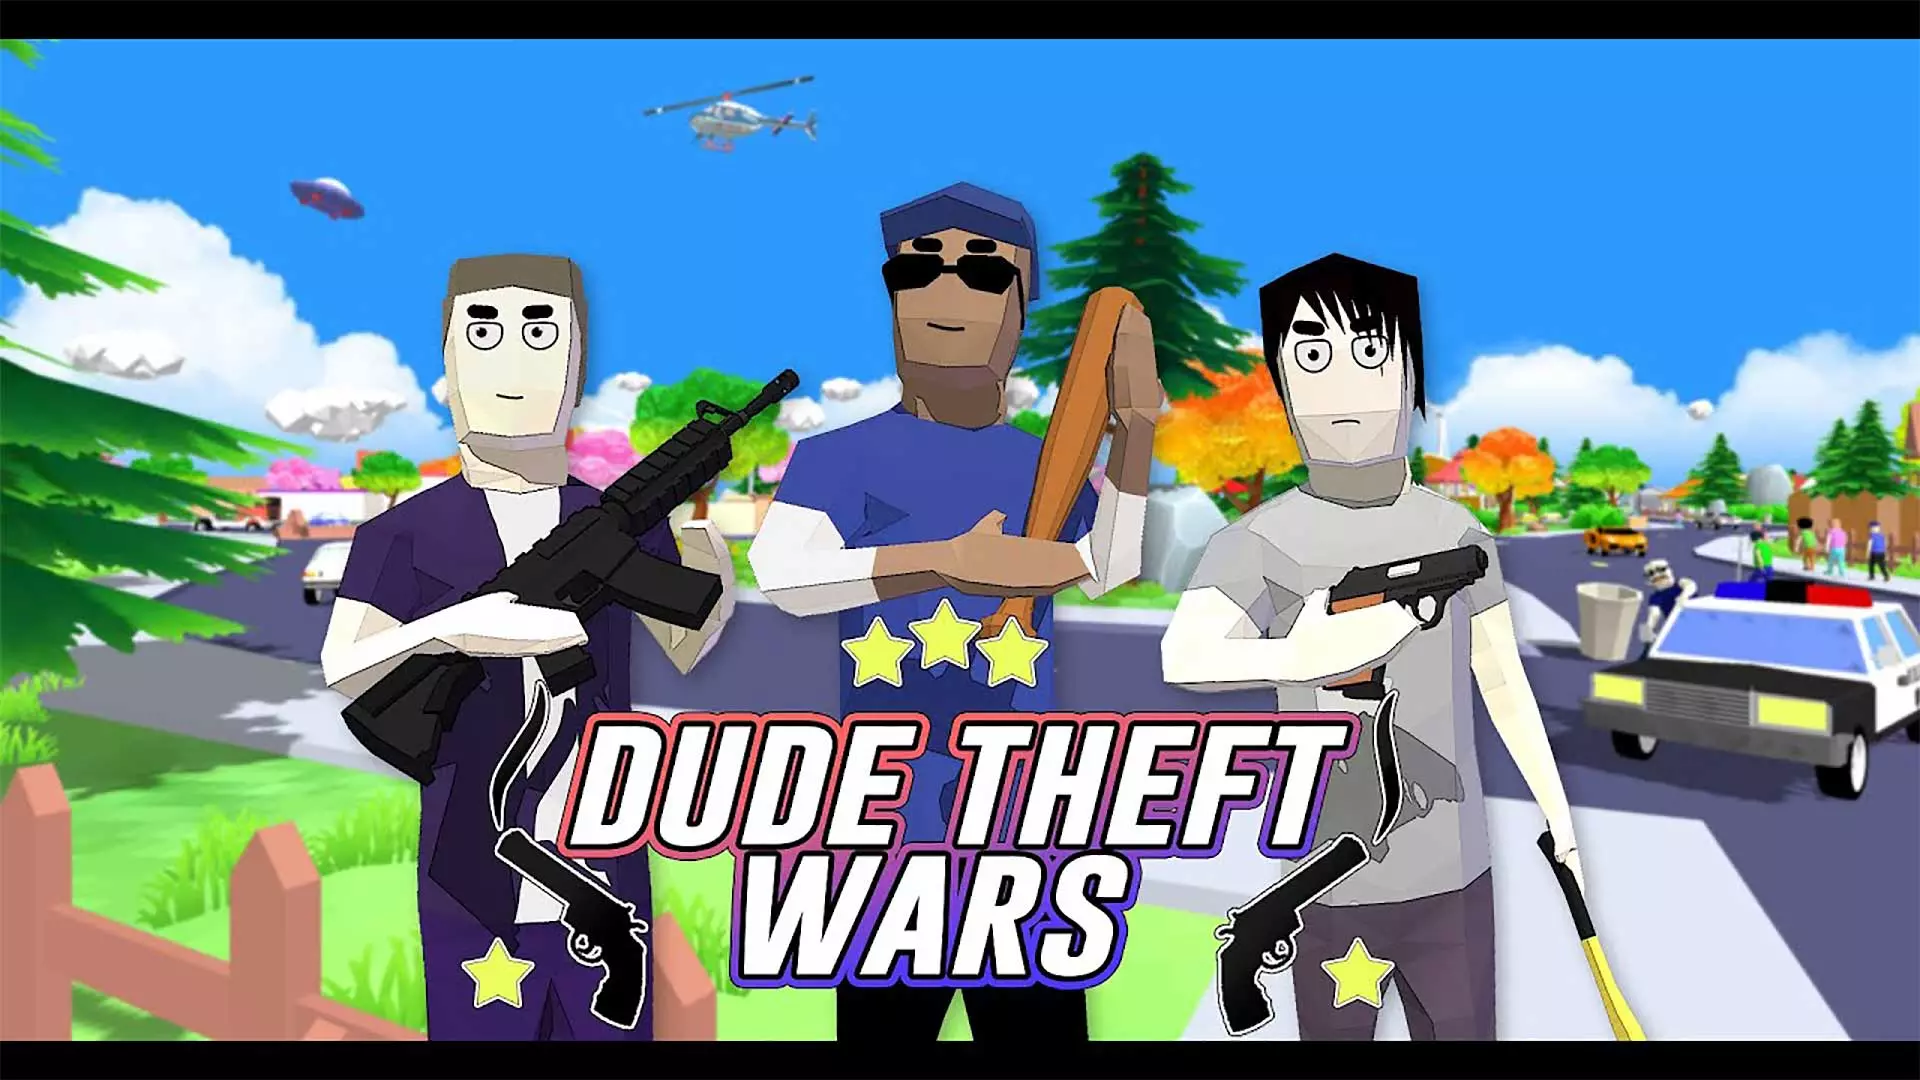 Dude the wars. Dude Theft Wars. Dude Theft Wars полиция. Dude Theft Wars 2017. Дуде Зефт ВАРС.